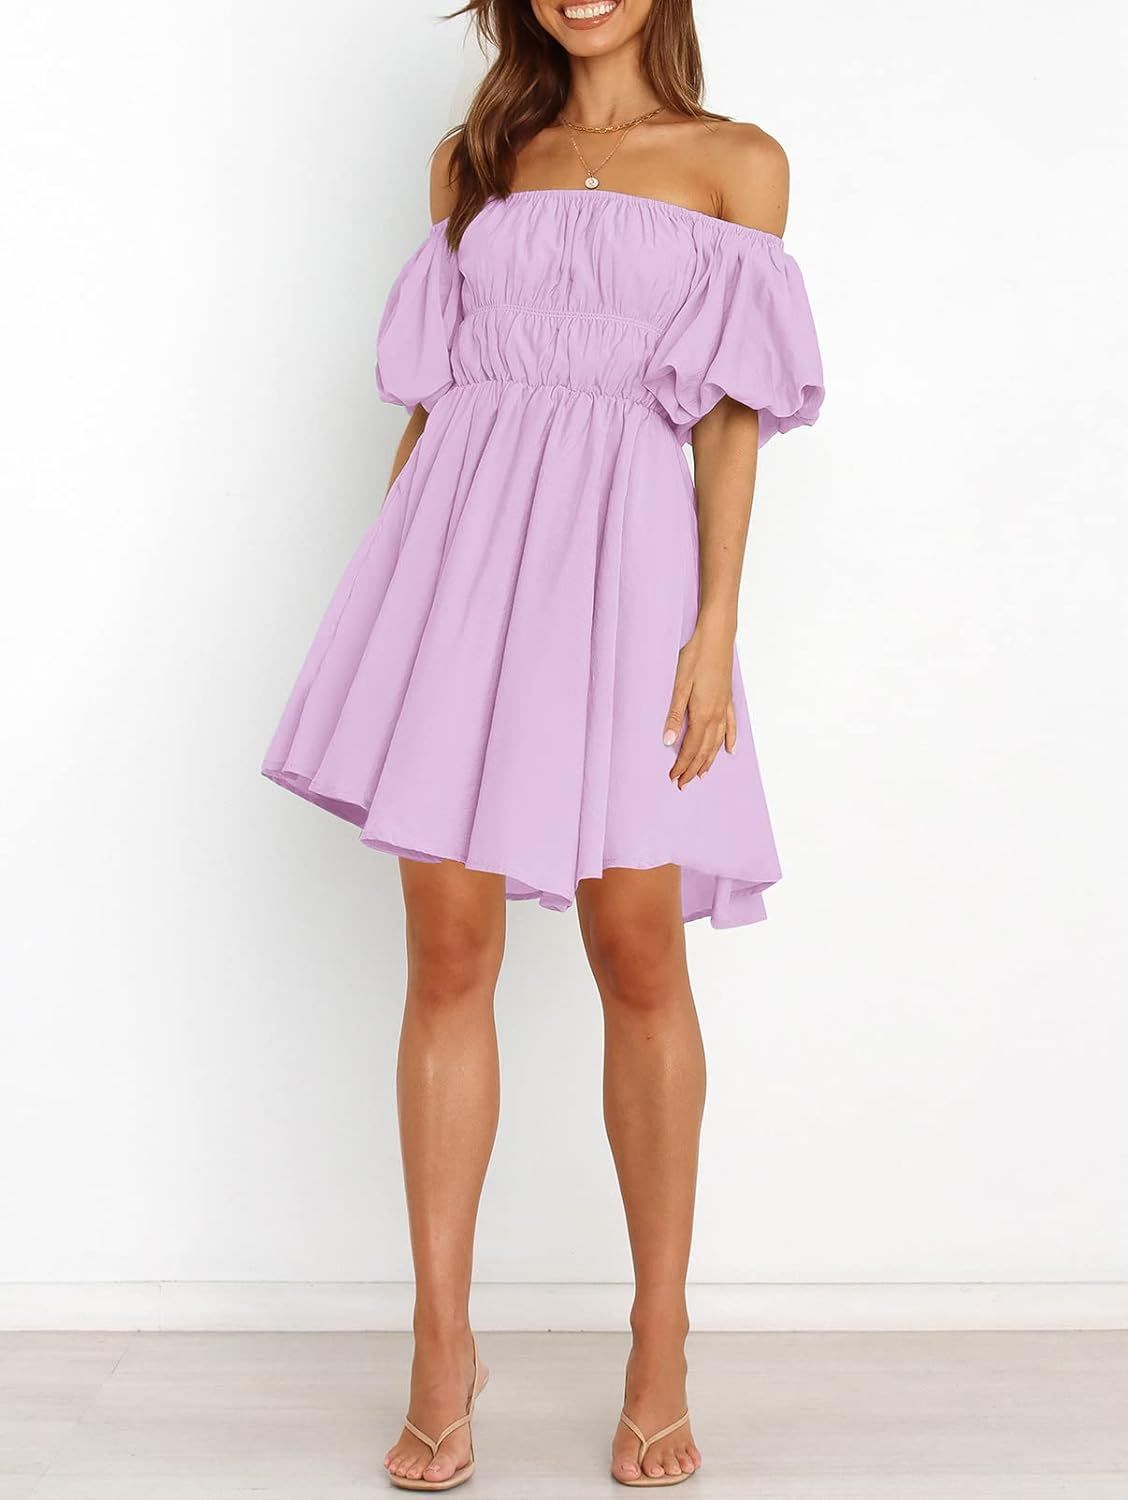 MEROKEETY Women's Puff Sleeve Off Shoulder A Line Dress Ruffle Shirred Summer Mini Dress with Poc... | Amazon (US)